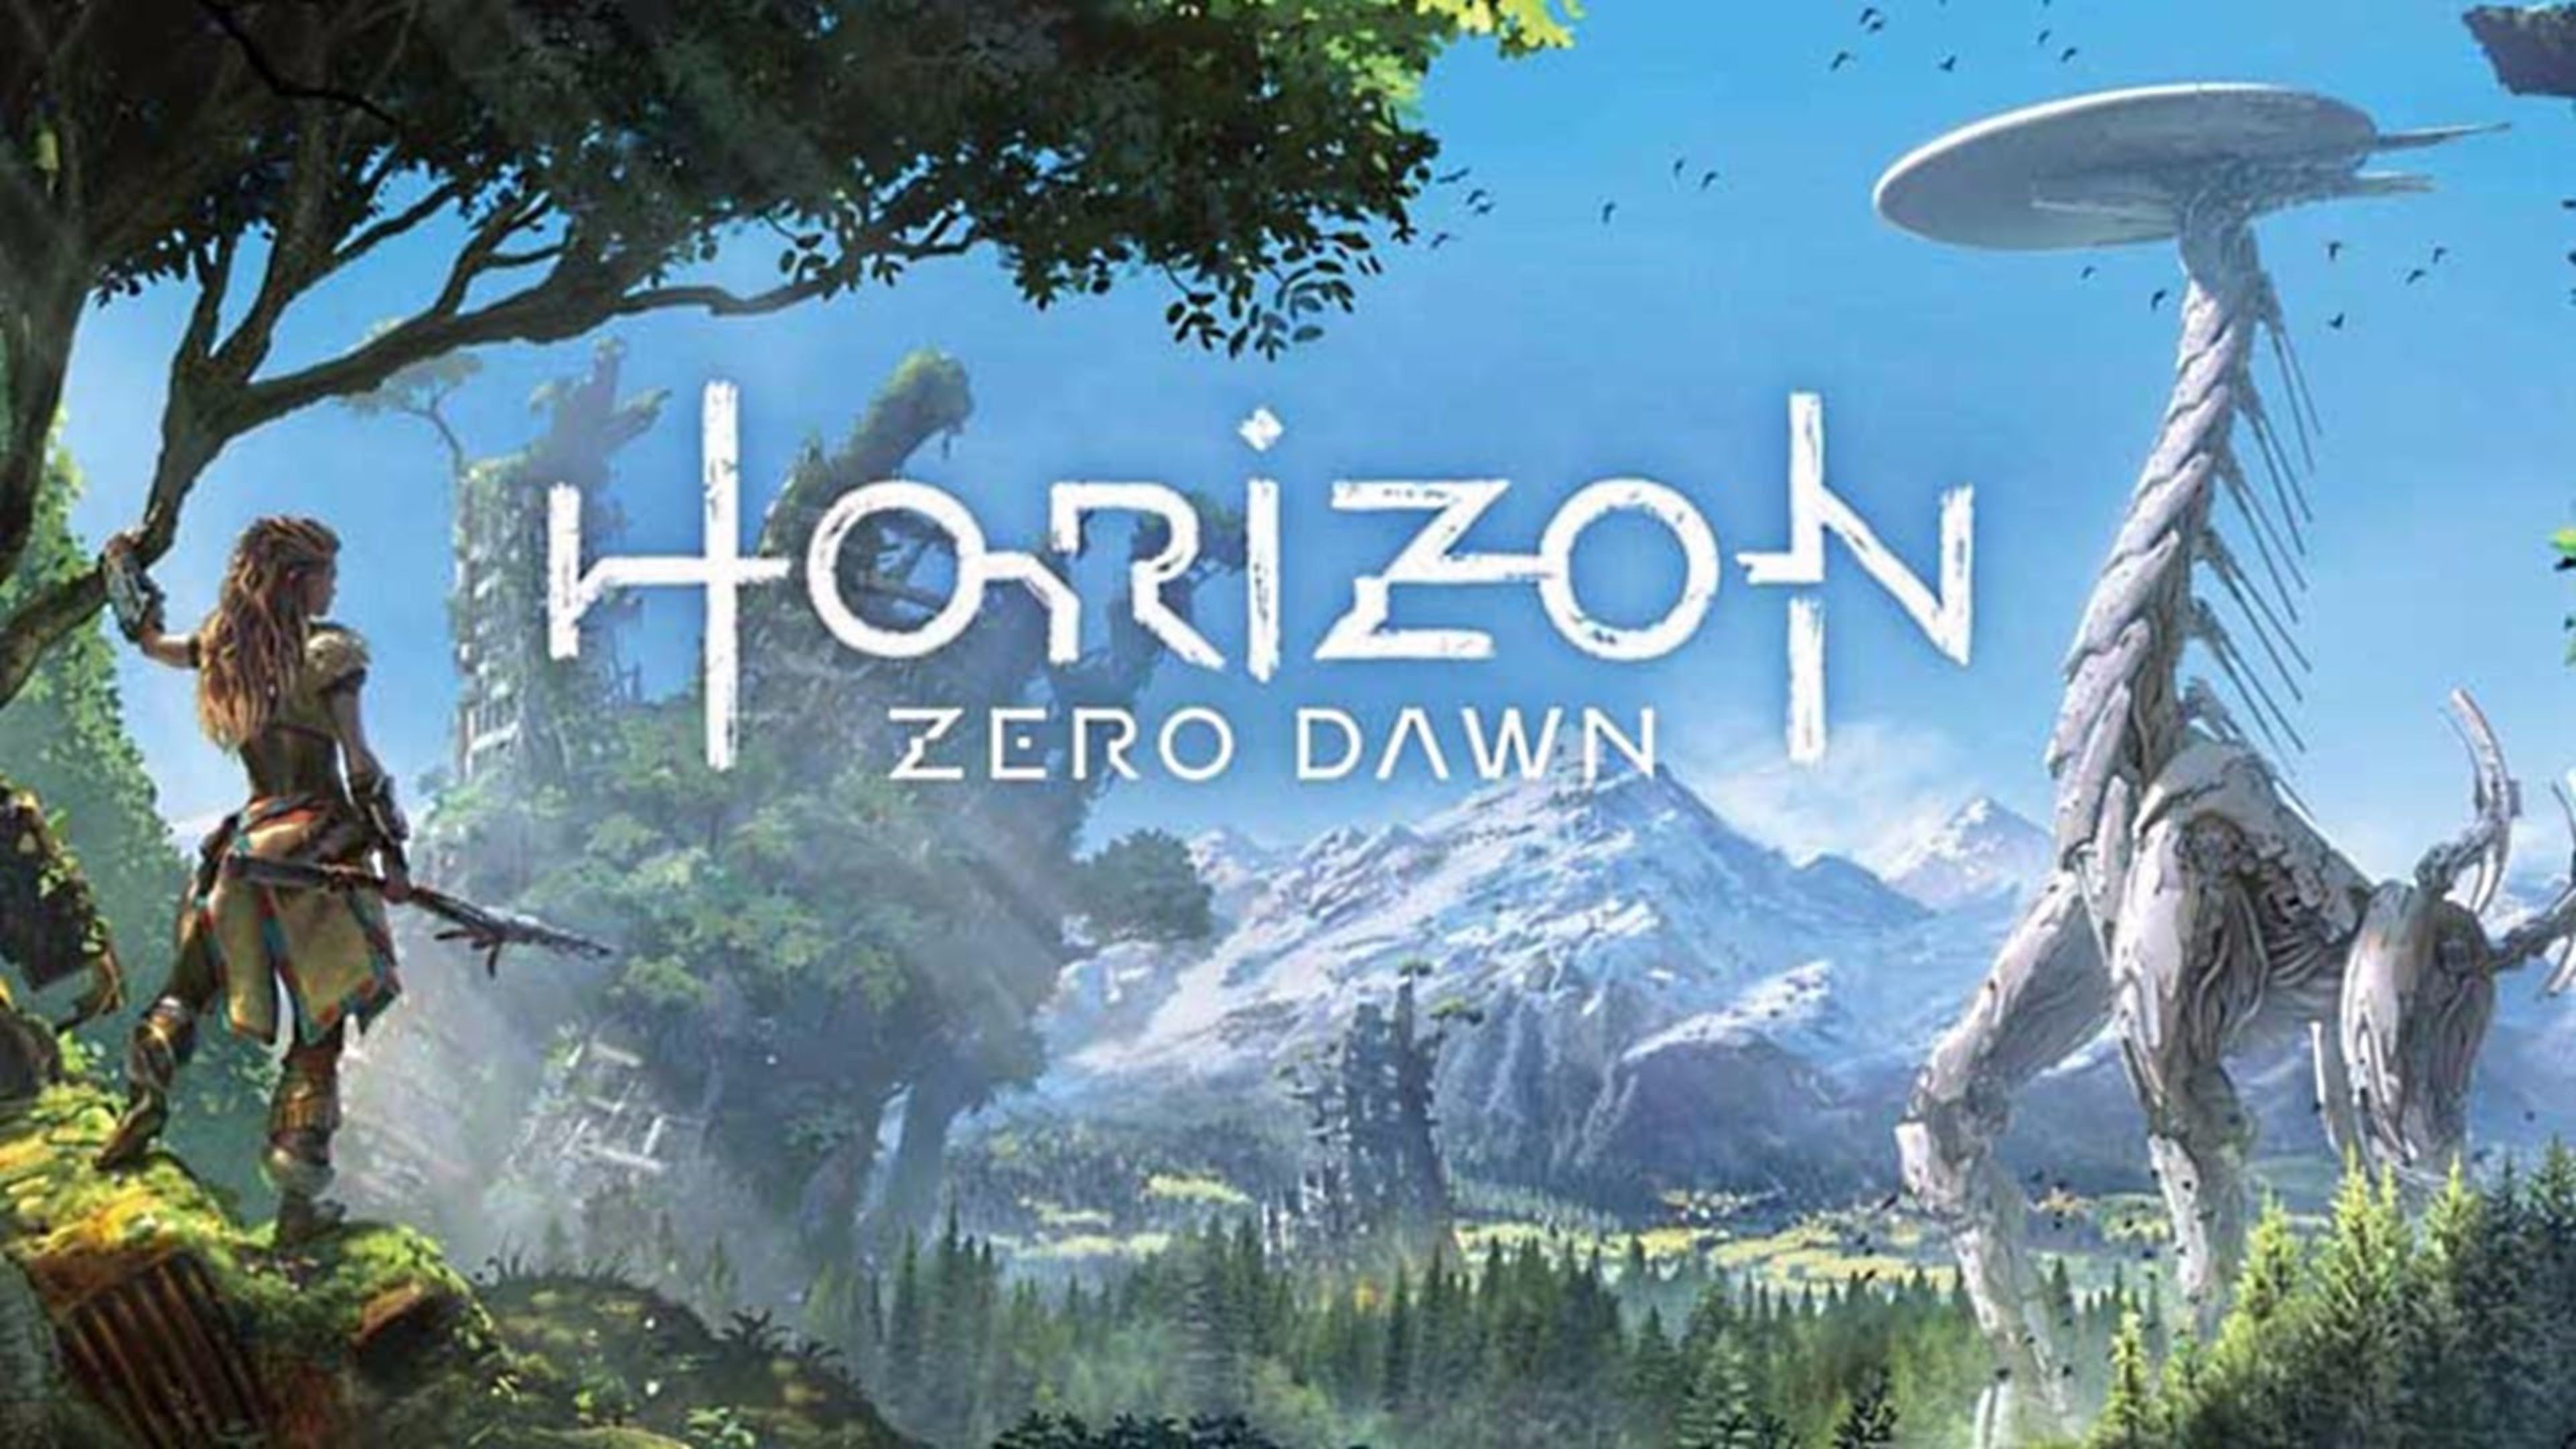 3840x2160 Playstation 4 Exclusive 2016 Horizon Zero Dawn 4K Wallpapers